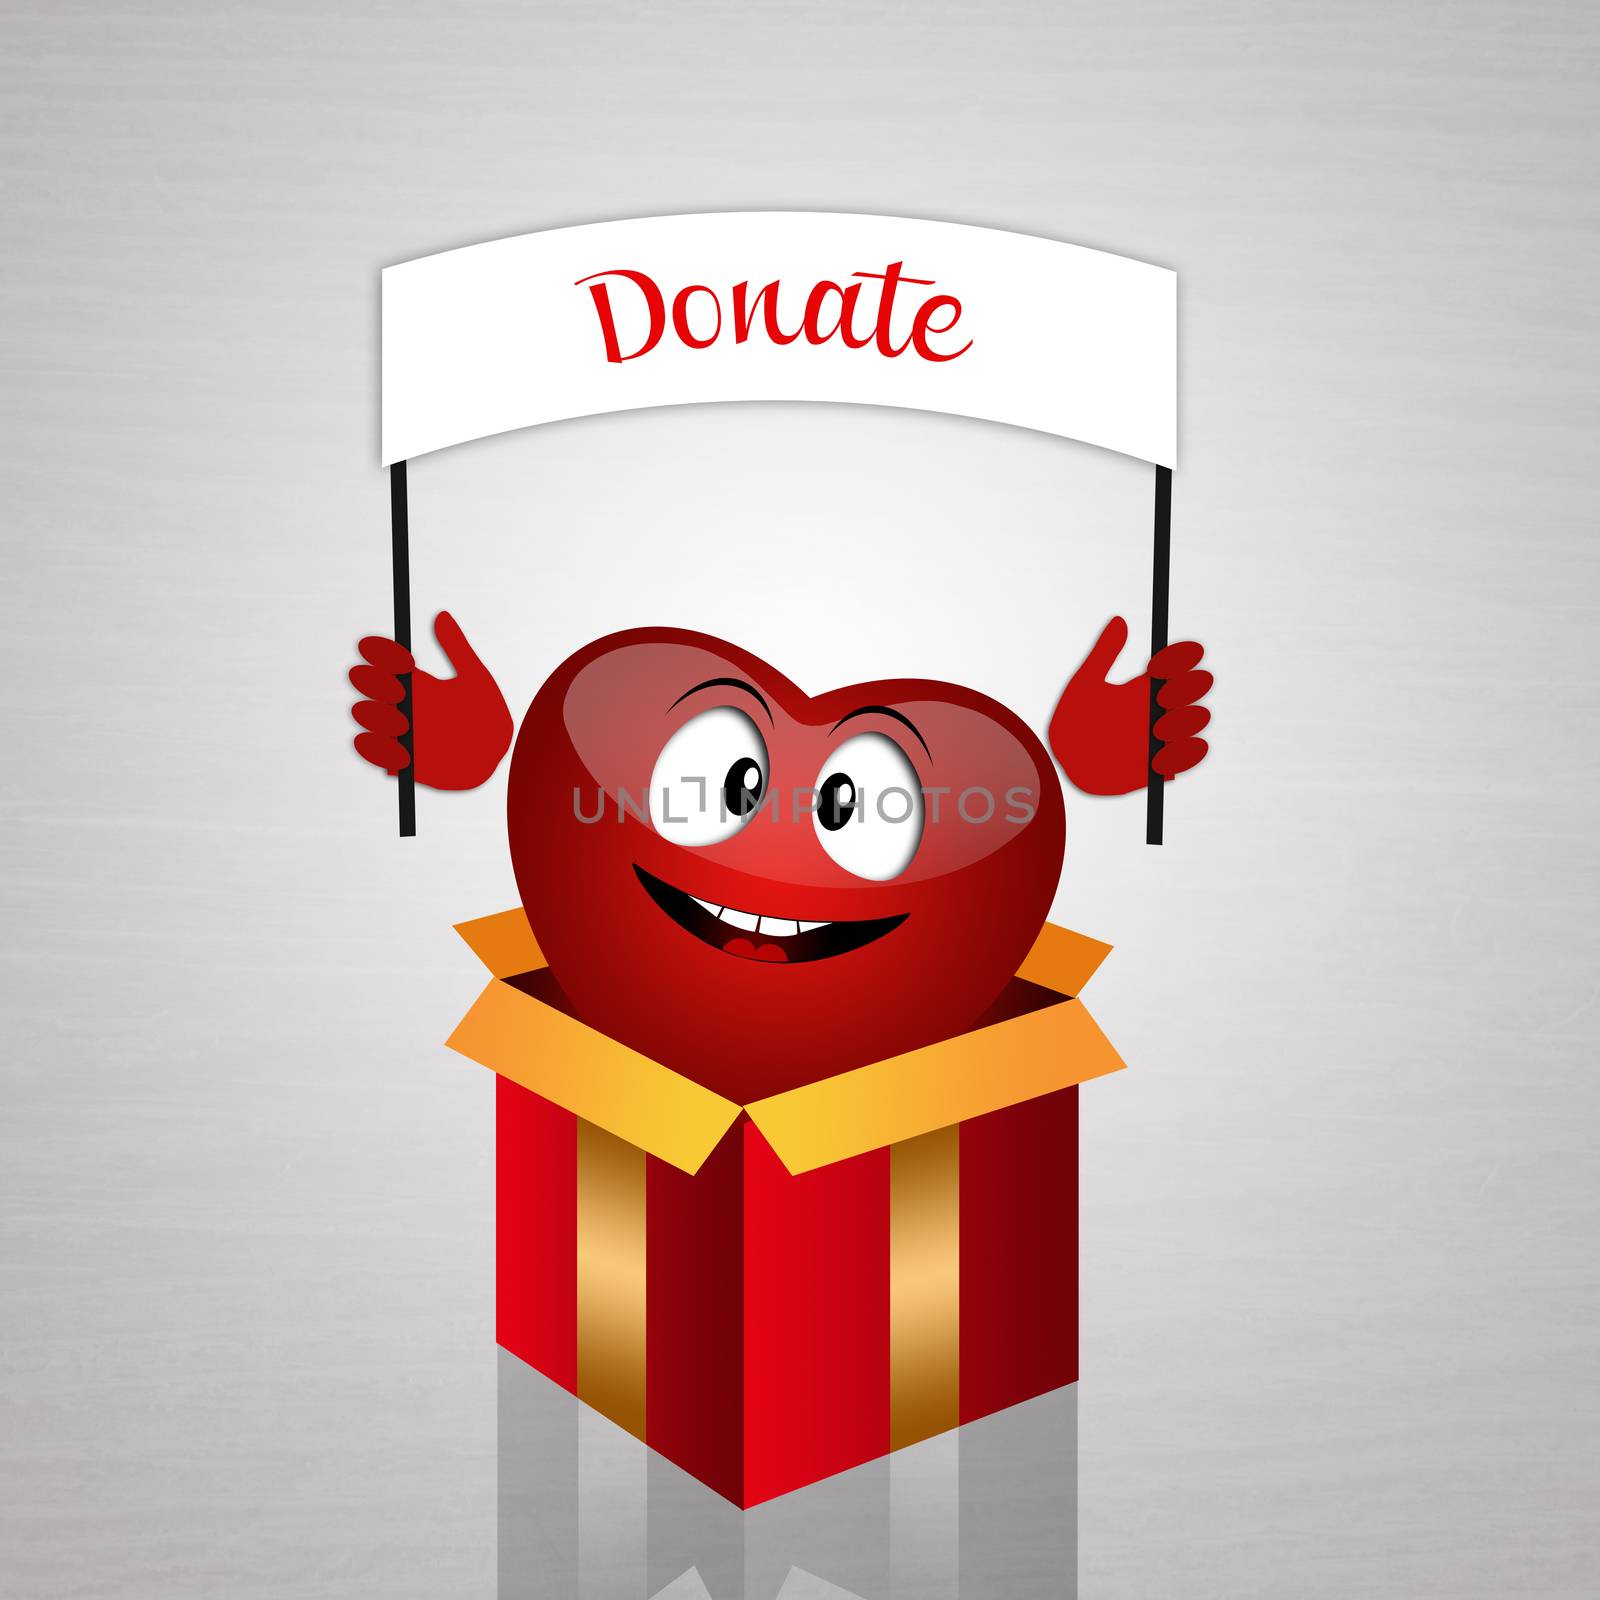 Organ donation by sognolucido